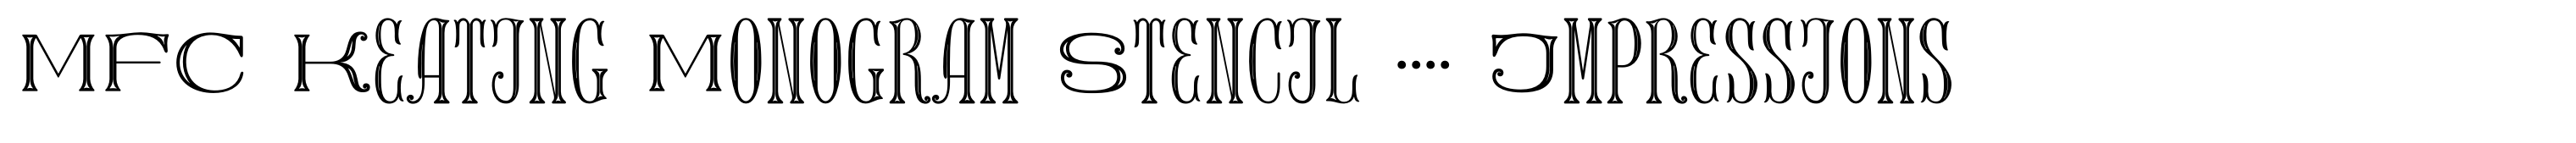 MFC Keating Monogram Stencil 1000 Impressions